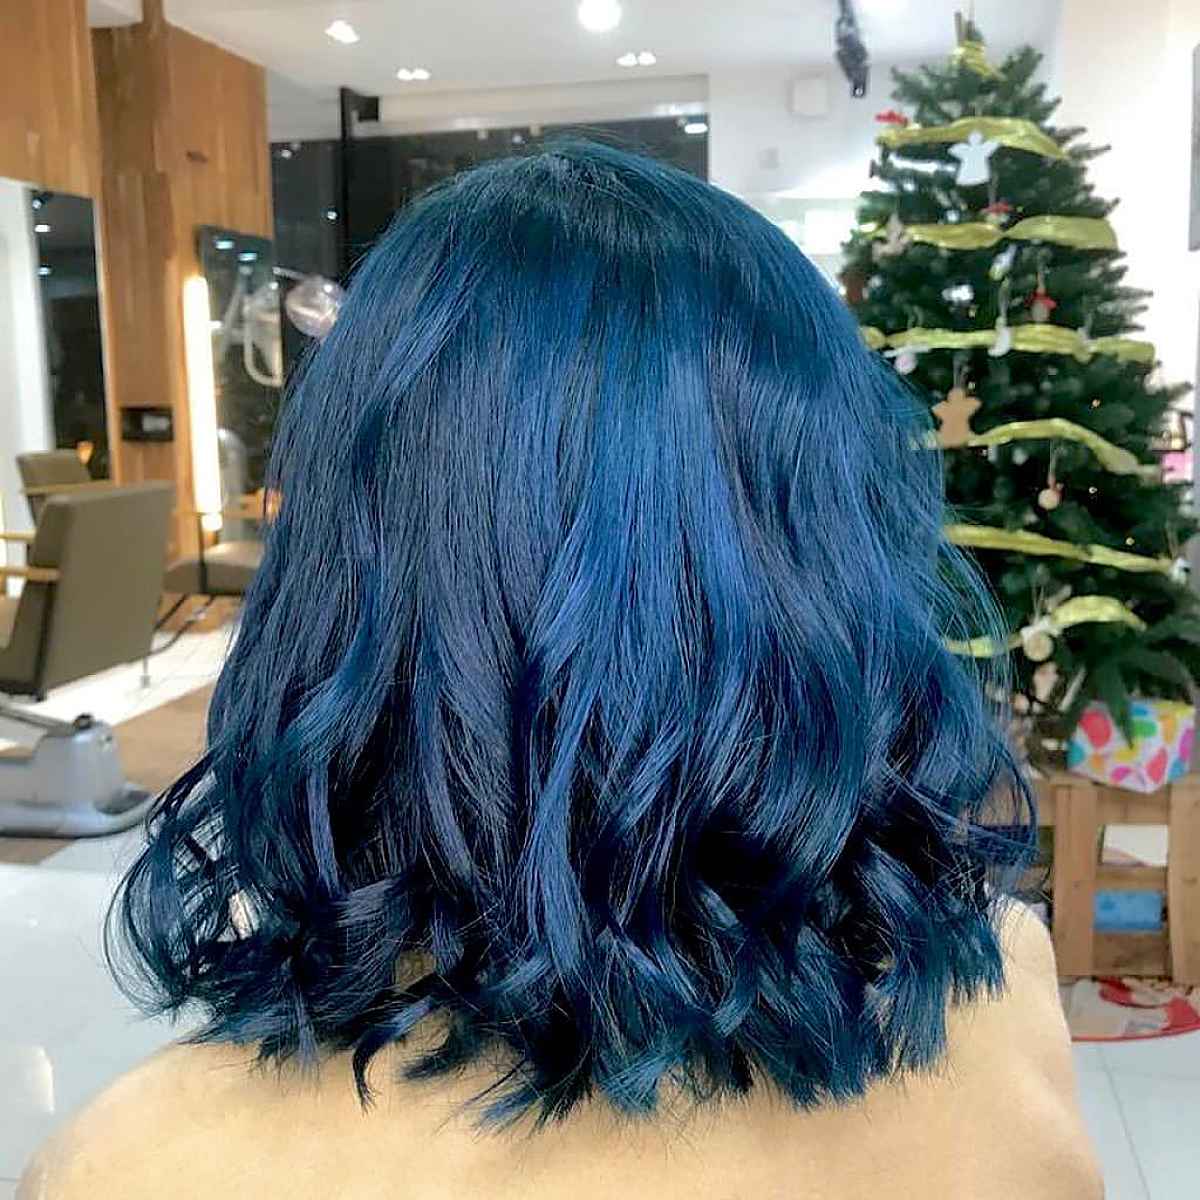 Blue hair - Wikipedia